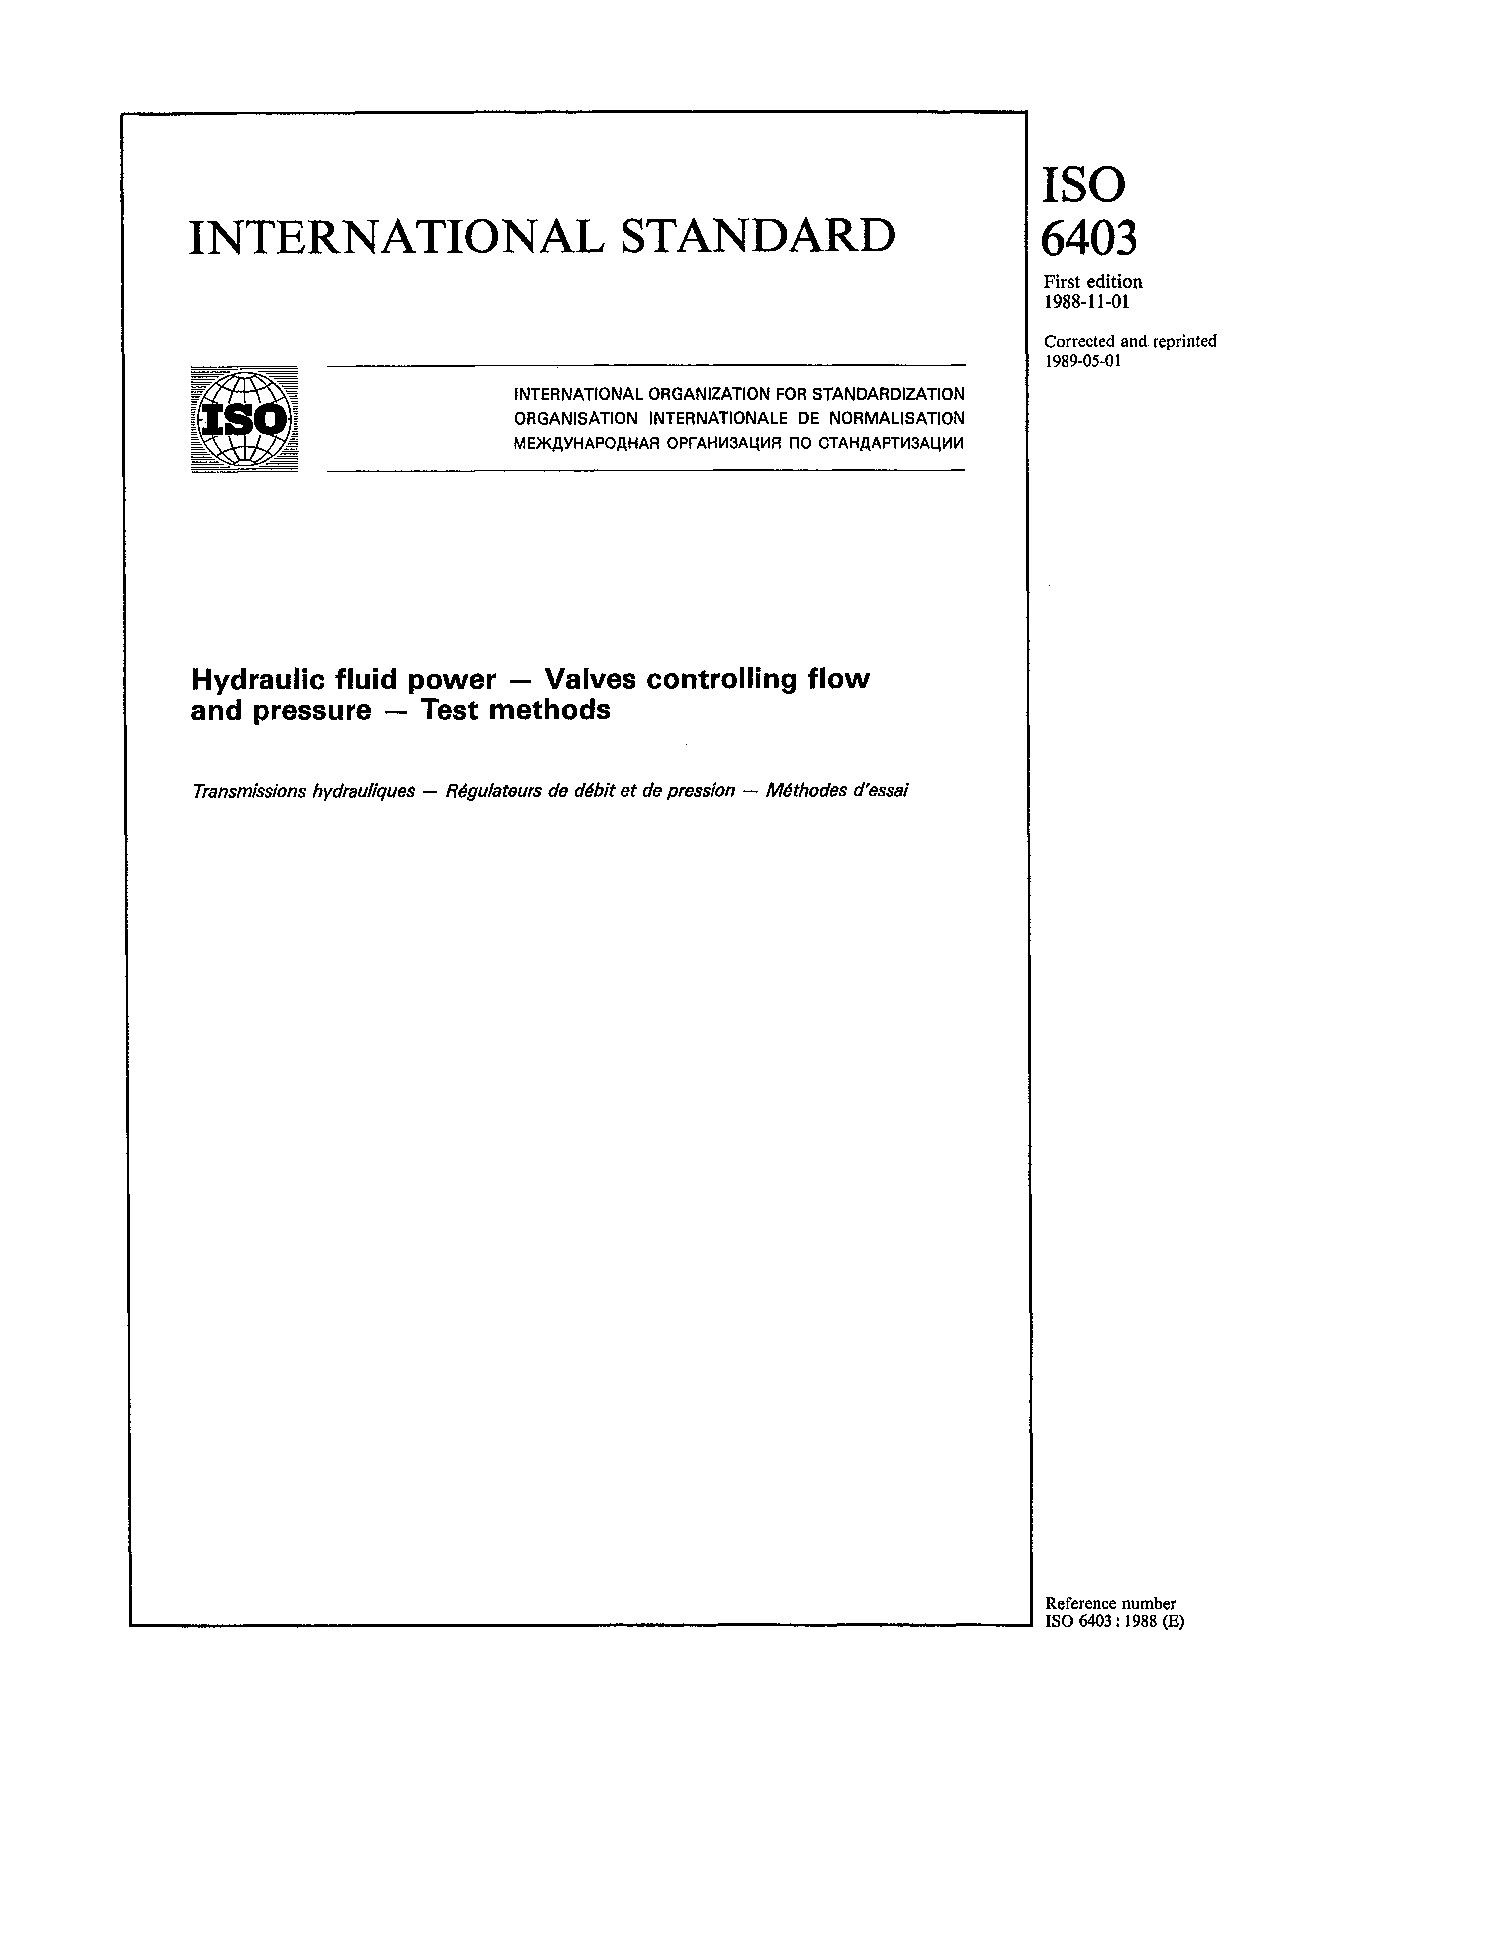 ISO 6403:1988/Cor 1:1989封面图